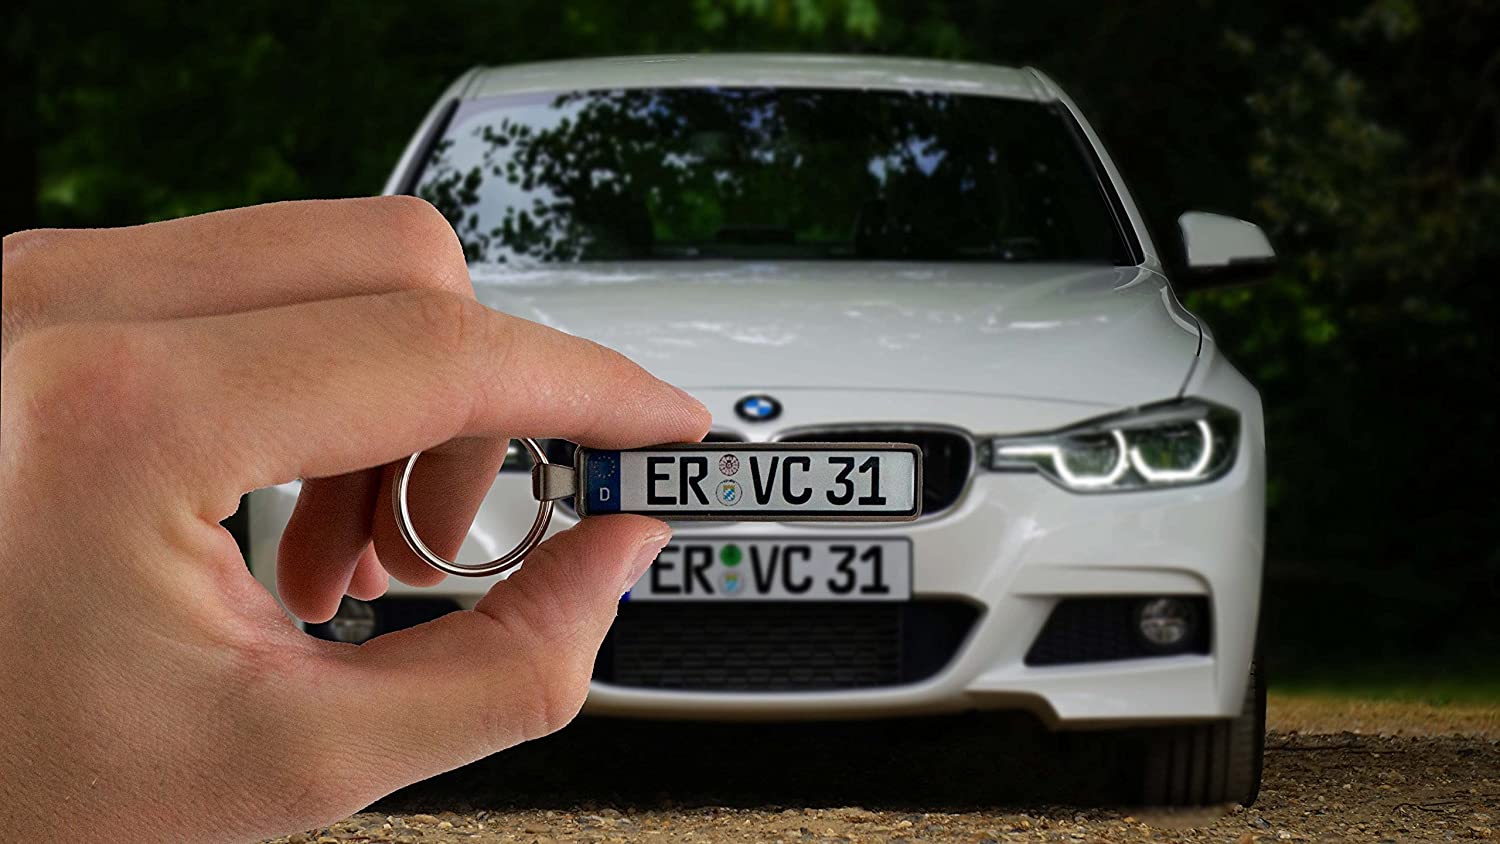 Best selling DIY car license number blank keychains